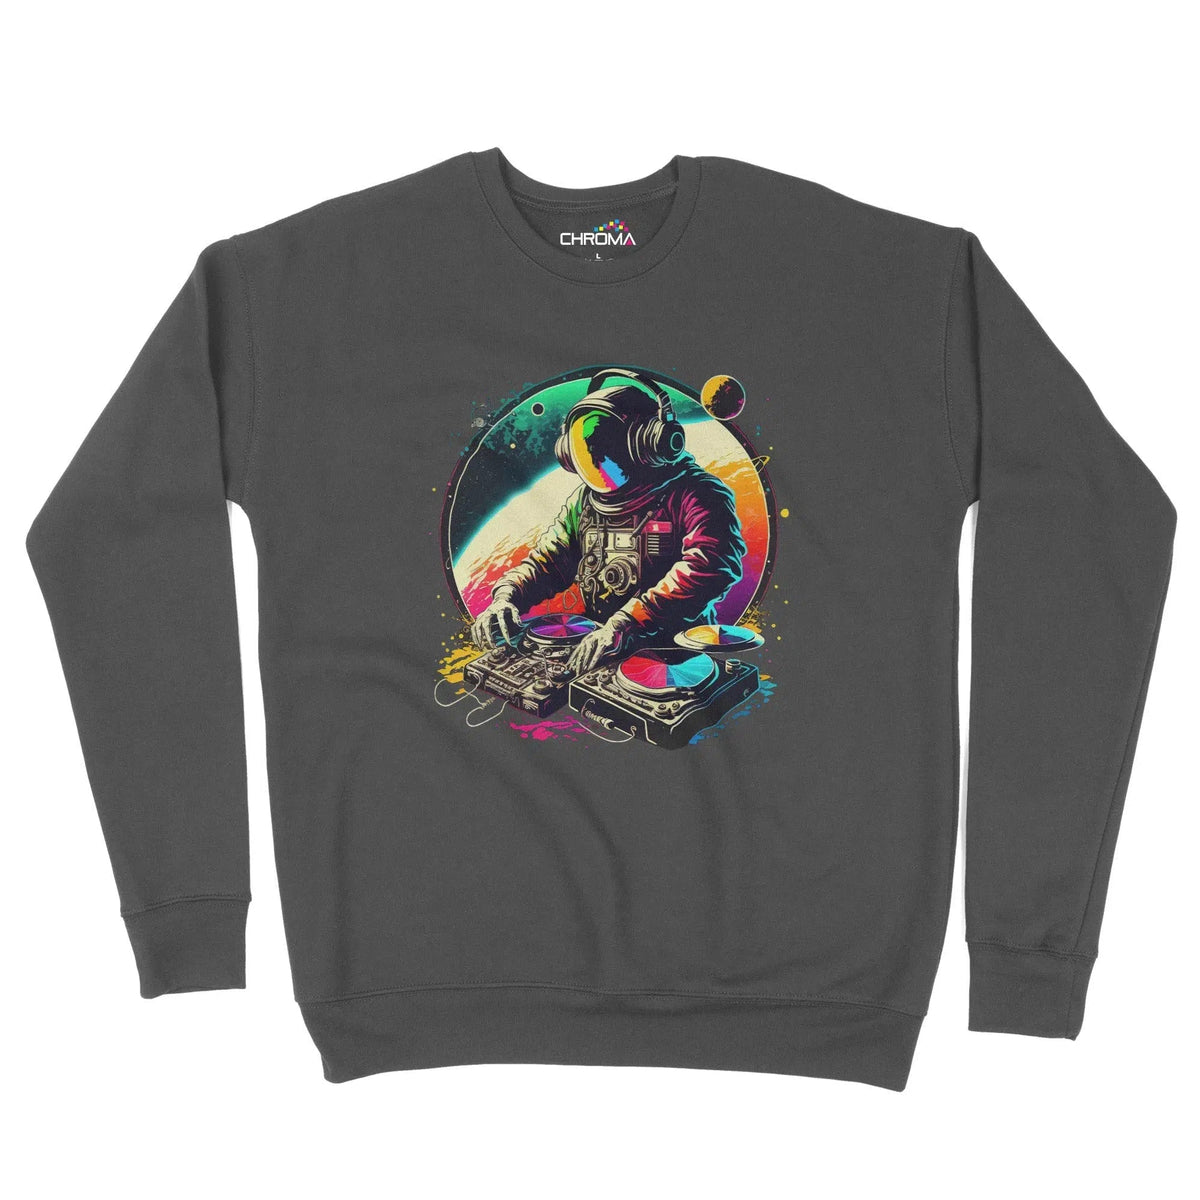 Astro Dj Unisex Adult Sweatshirt Chroma Clothing